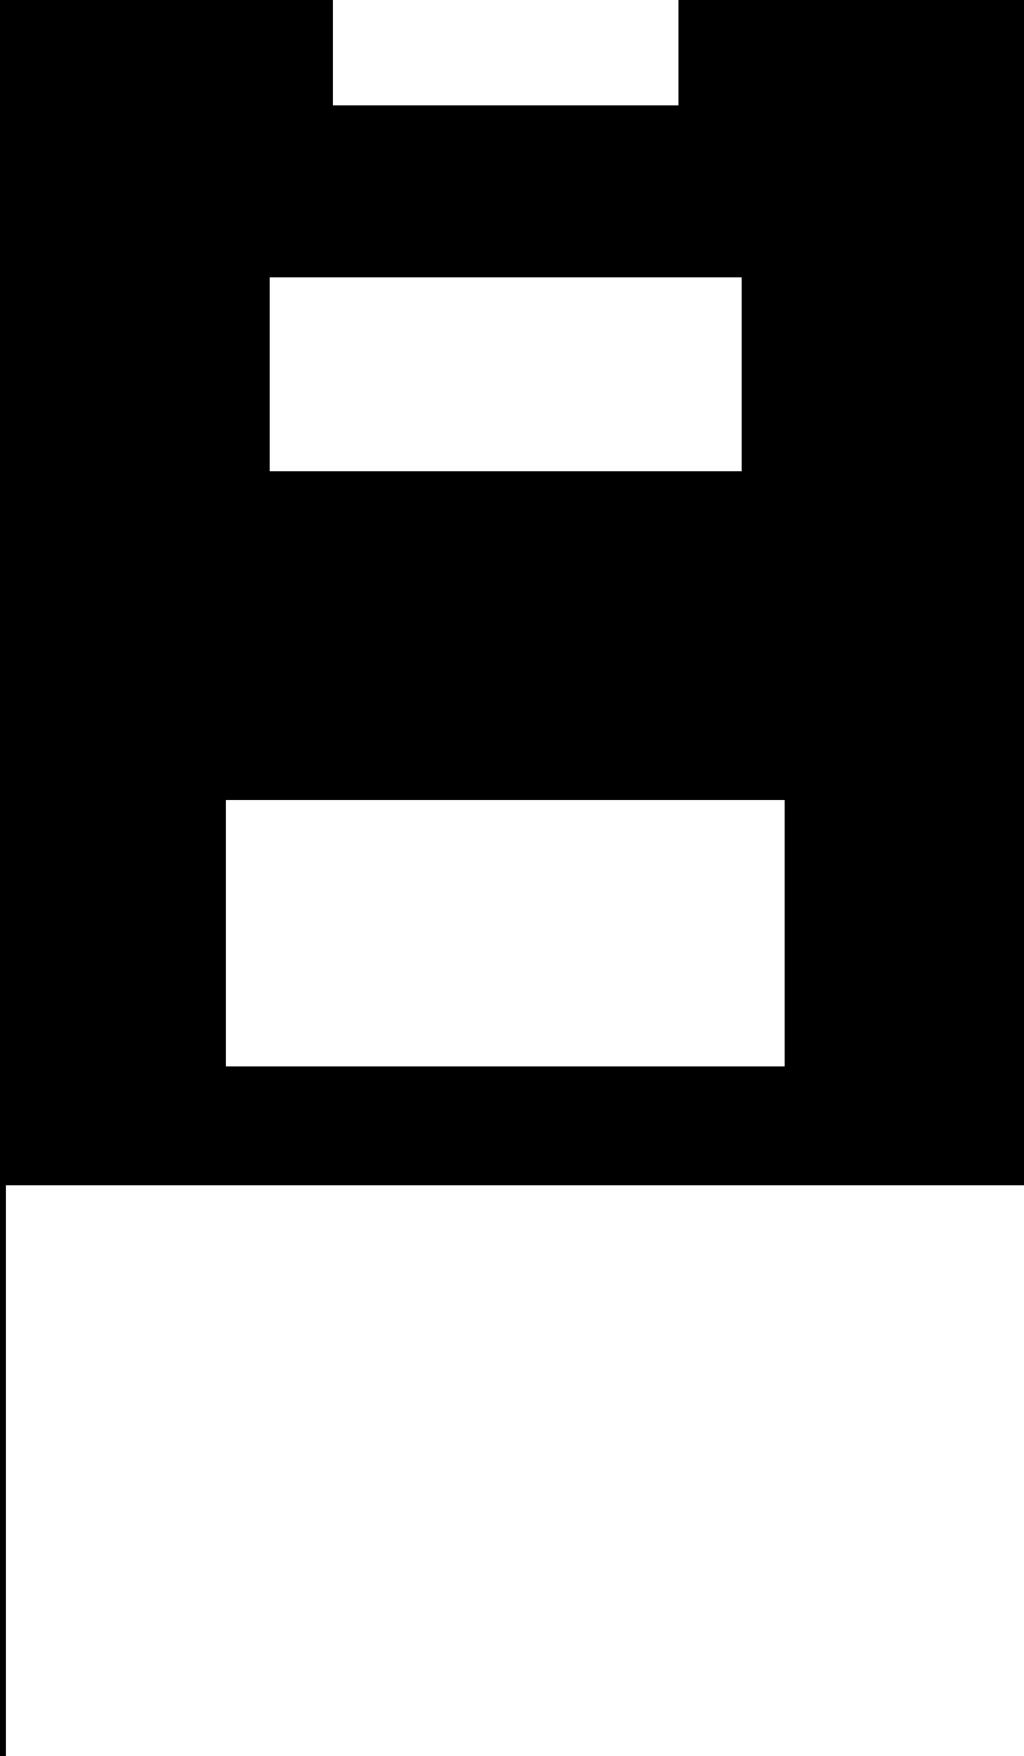 logo Viettel trên Notification Bar.